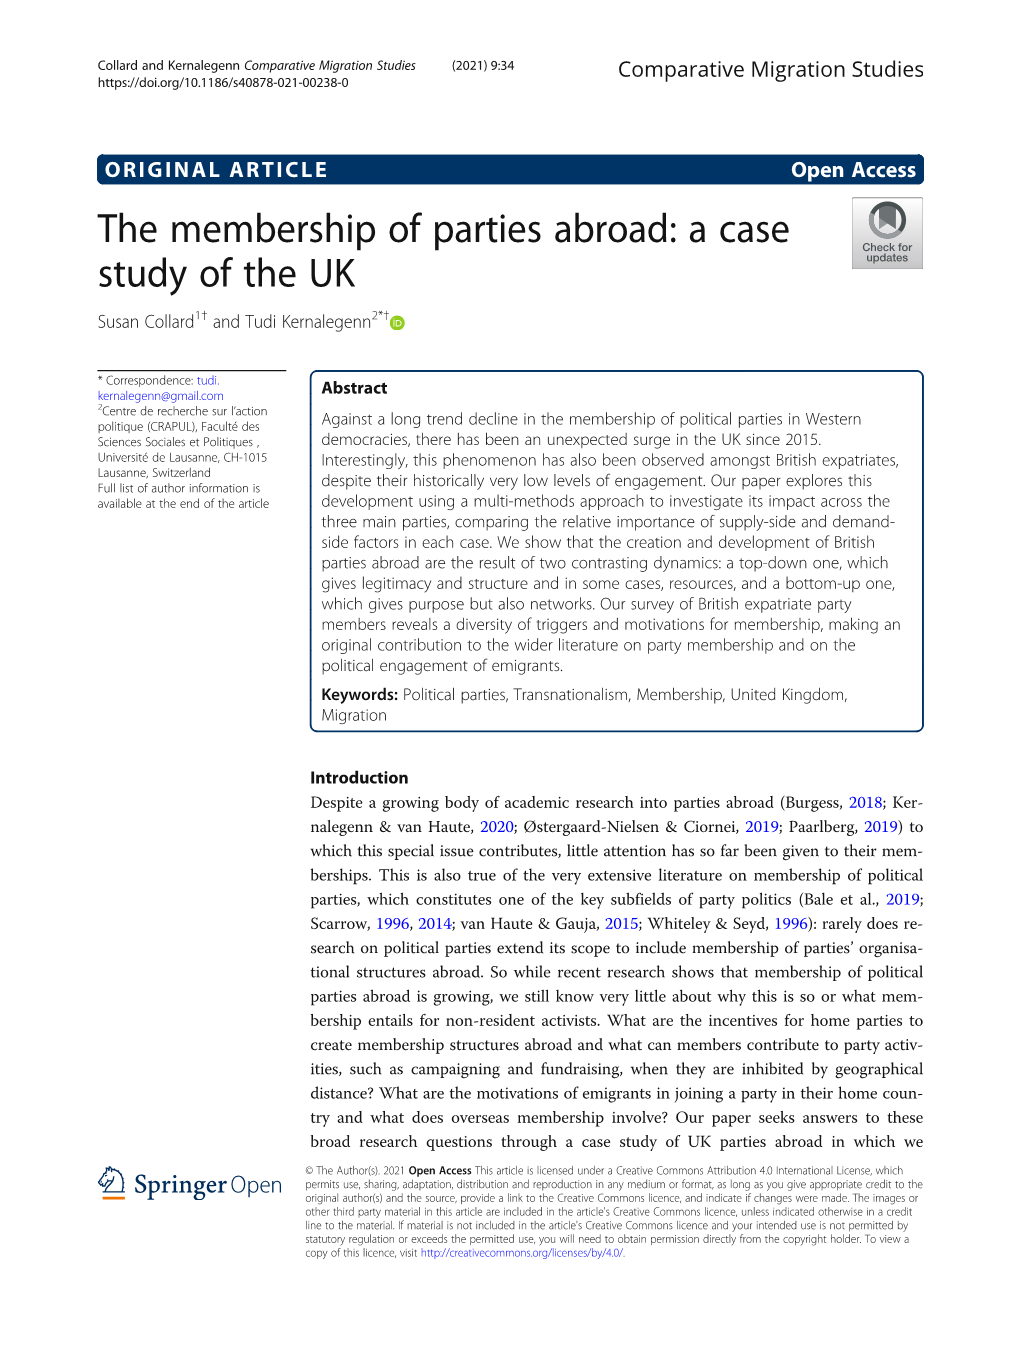 The Membership of Parties Abroad: a Case Study of the UK Susan Collard1† and Tudi Kernalegenn2*†